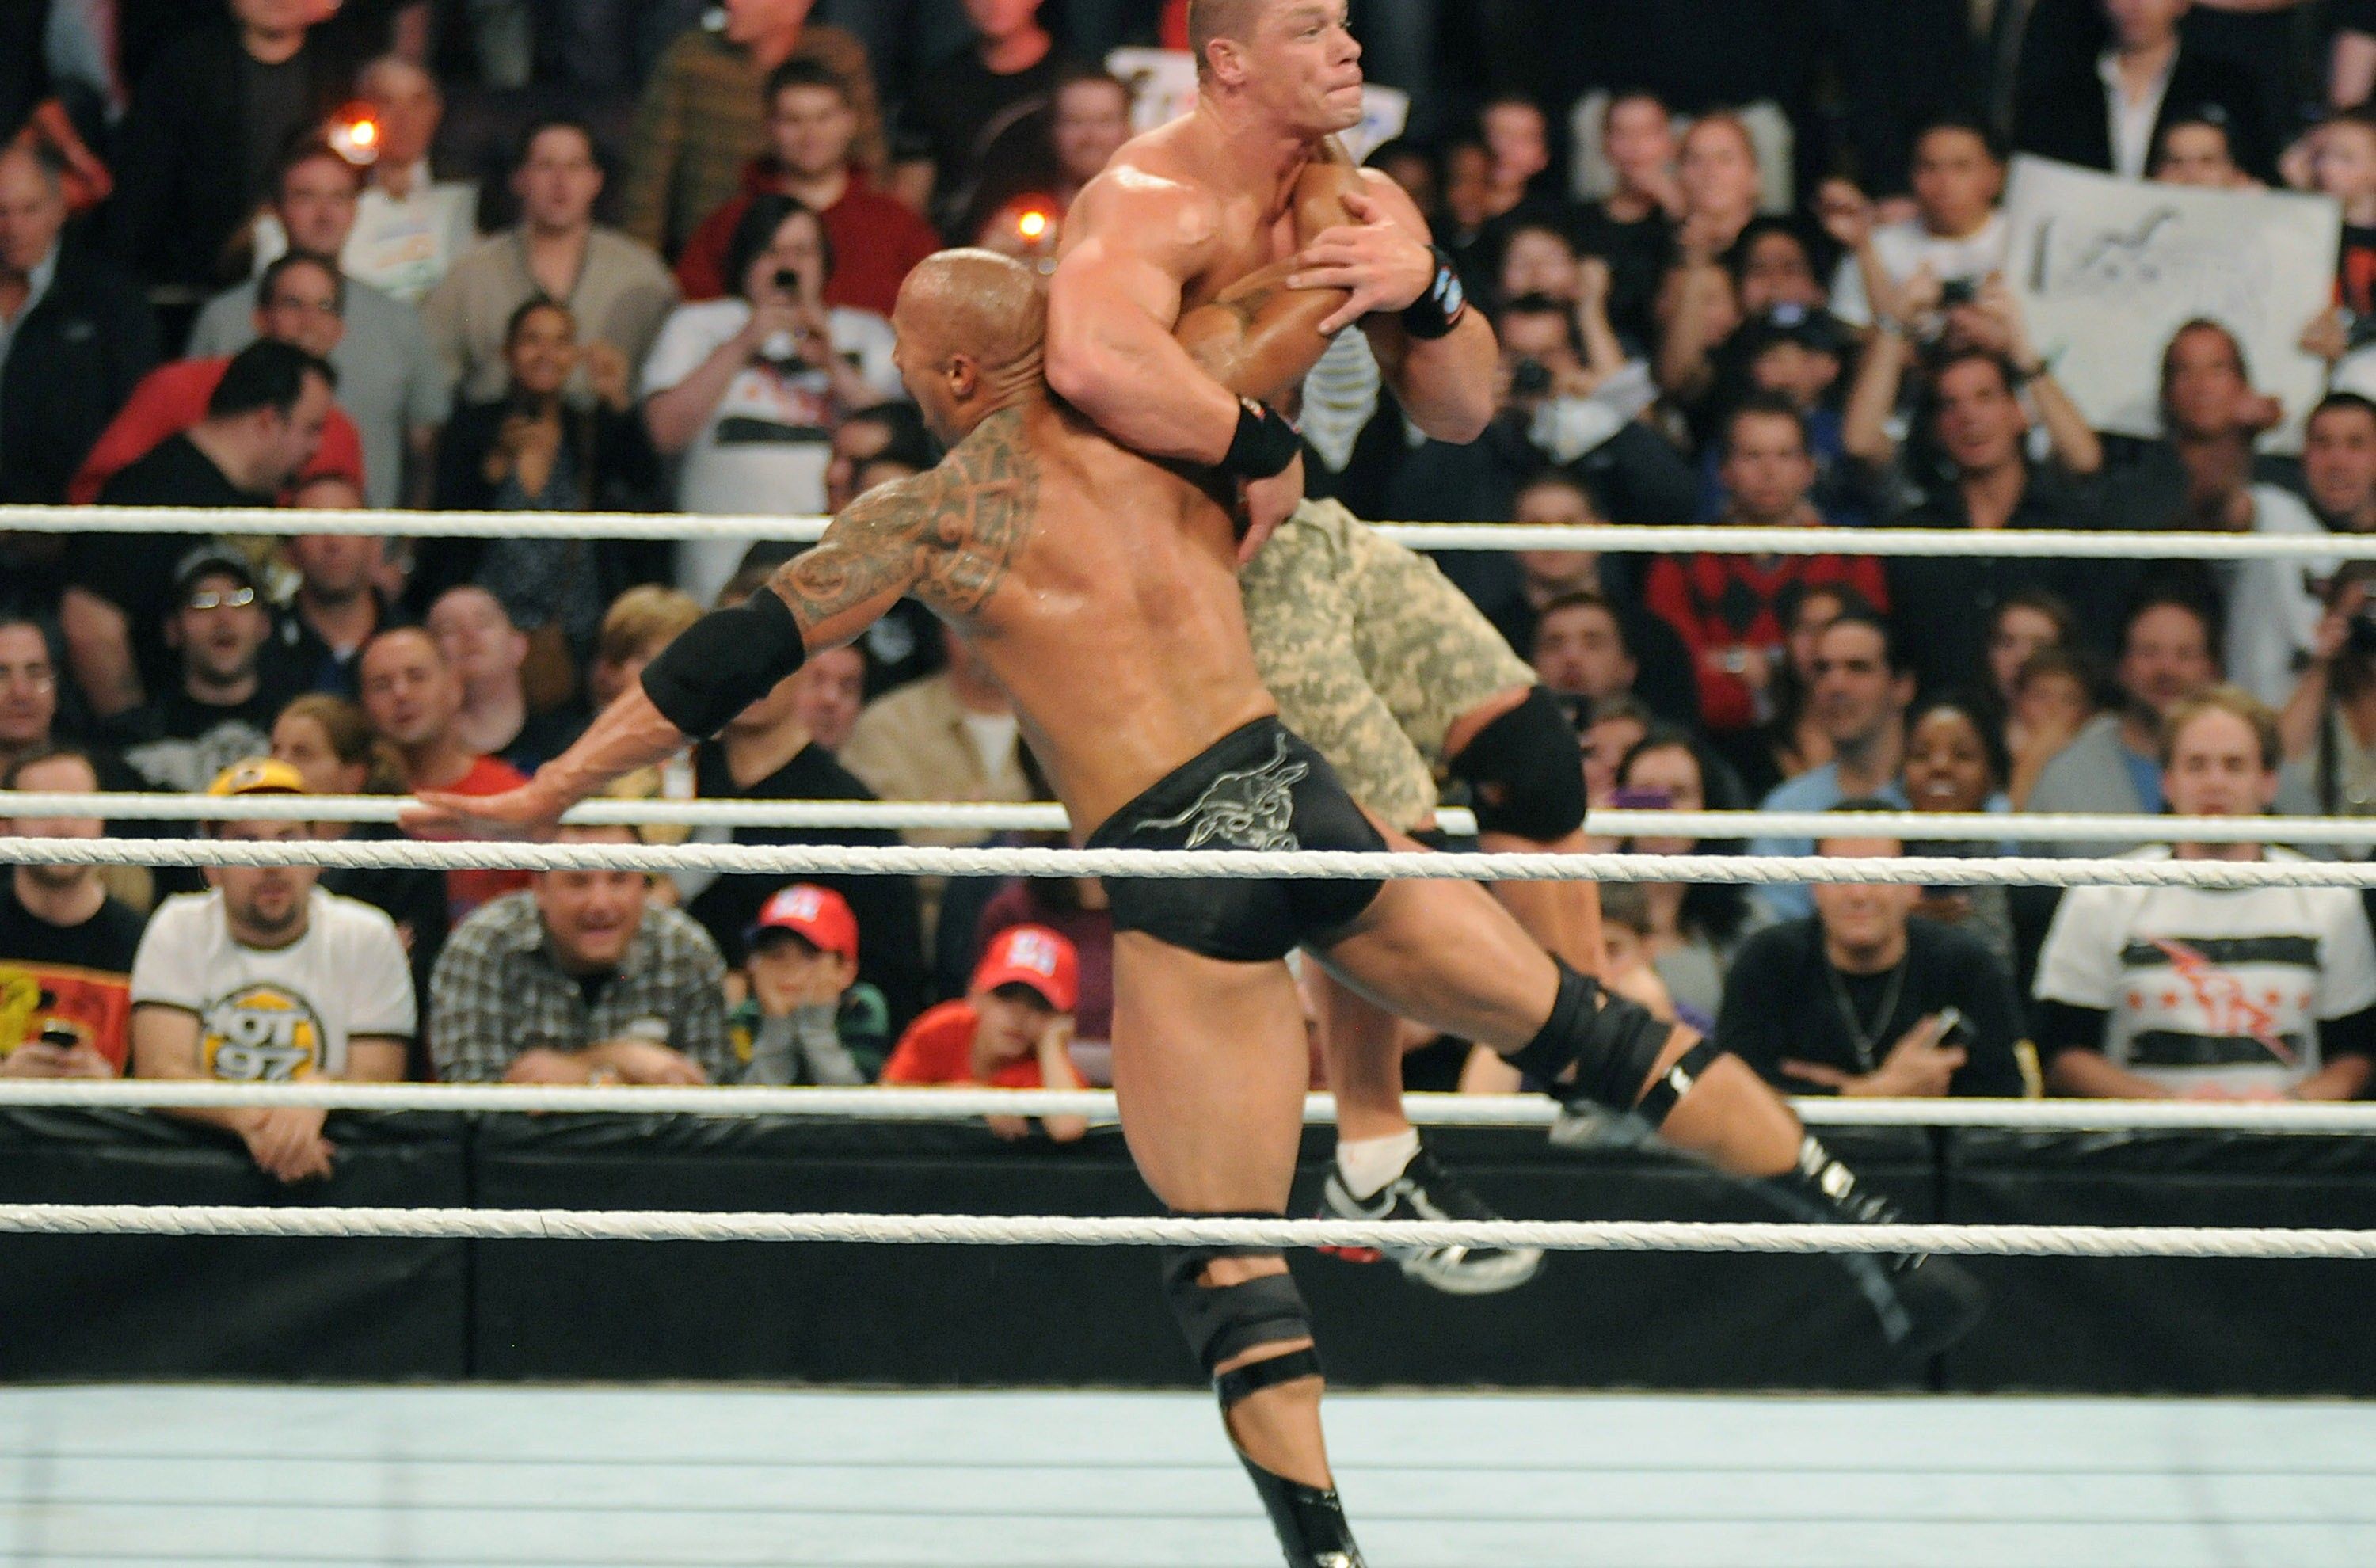 Rock And John Cena Wwe Fight HD Wallpaper And John Cena